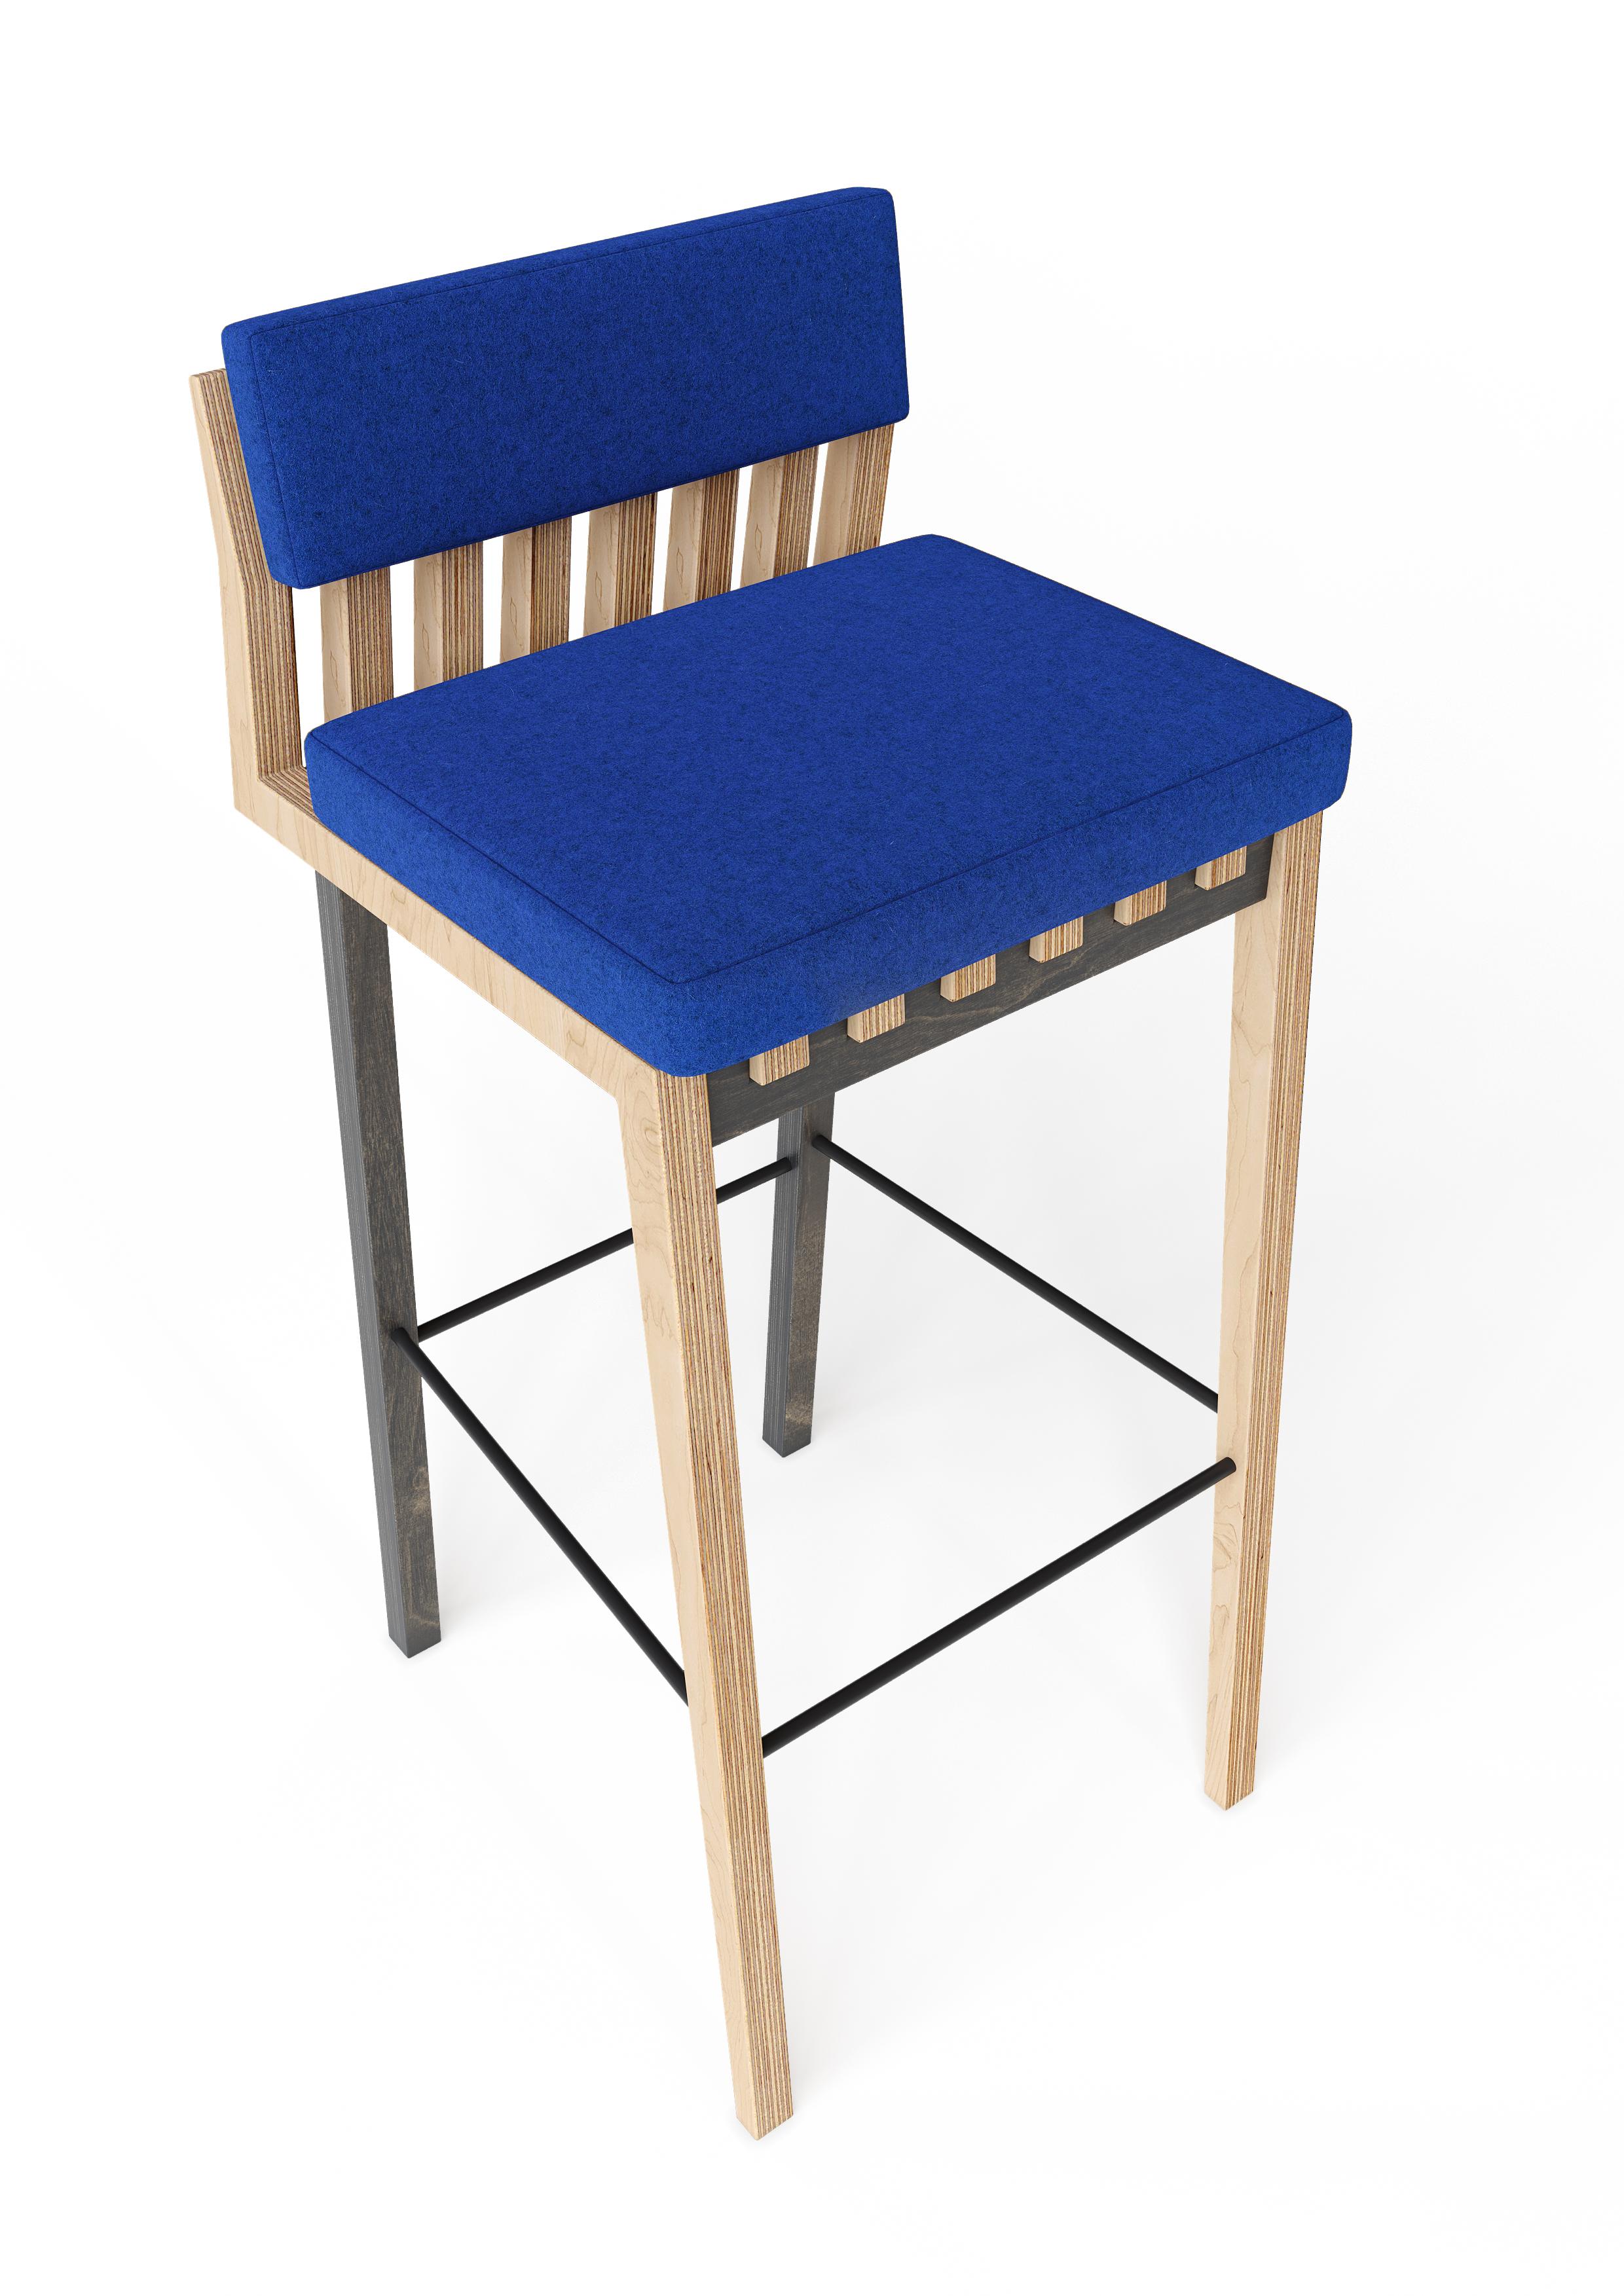 Danish Scandinavian Designer Stool Bar Chair For Sale